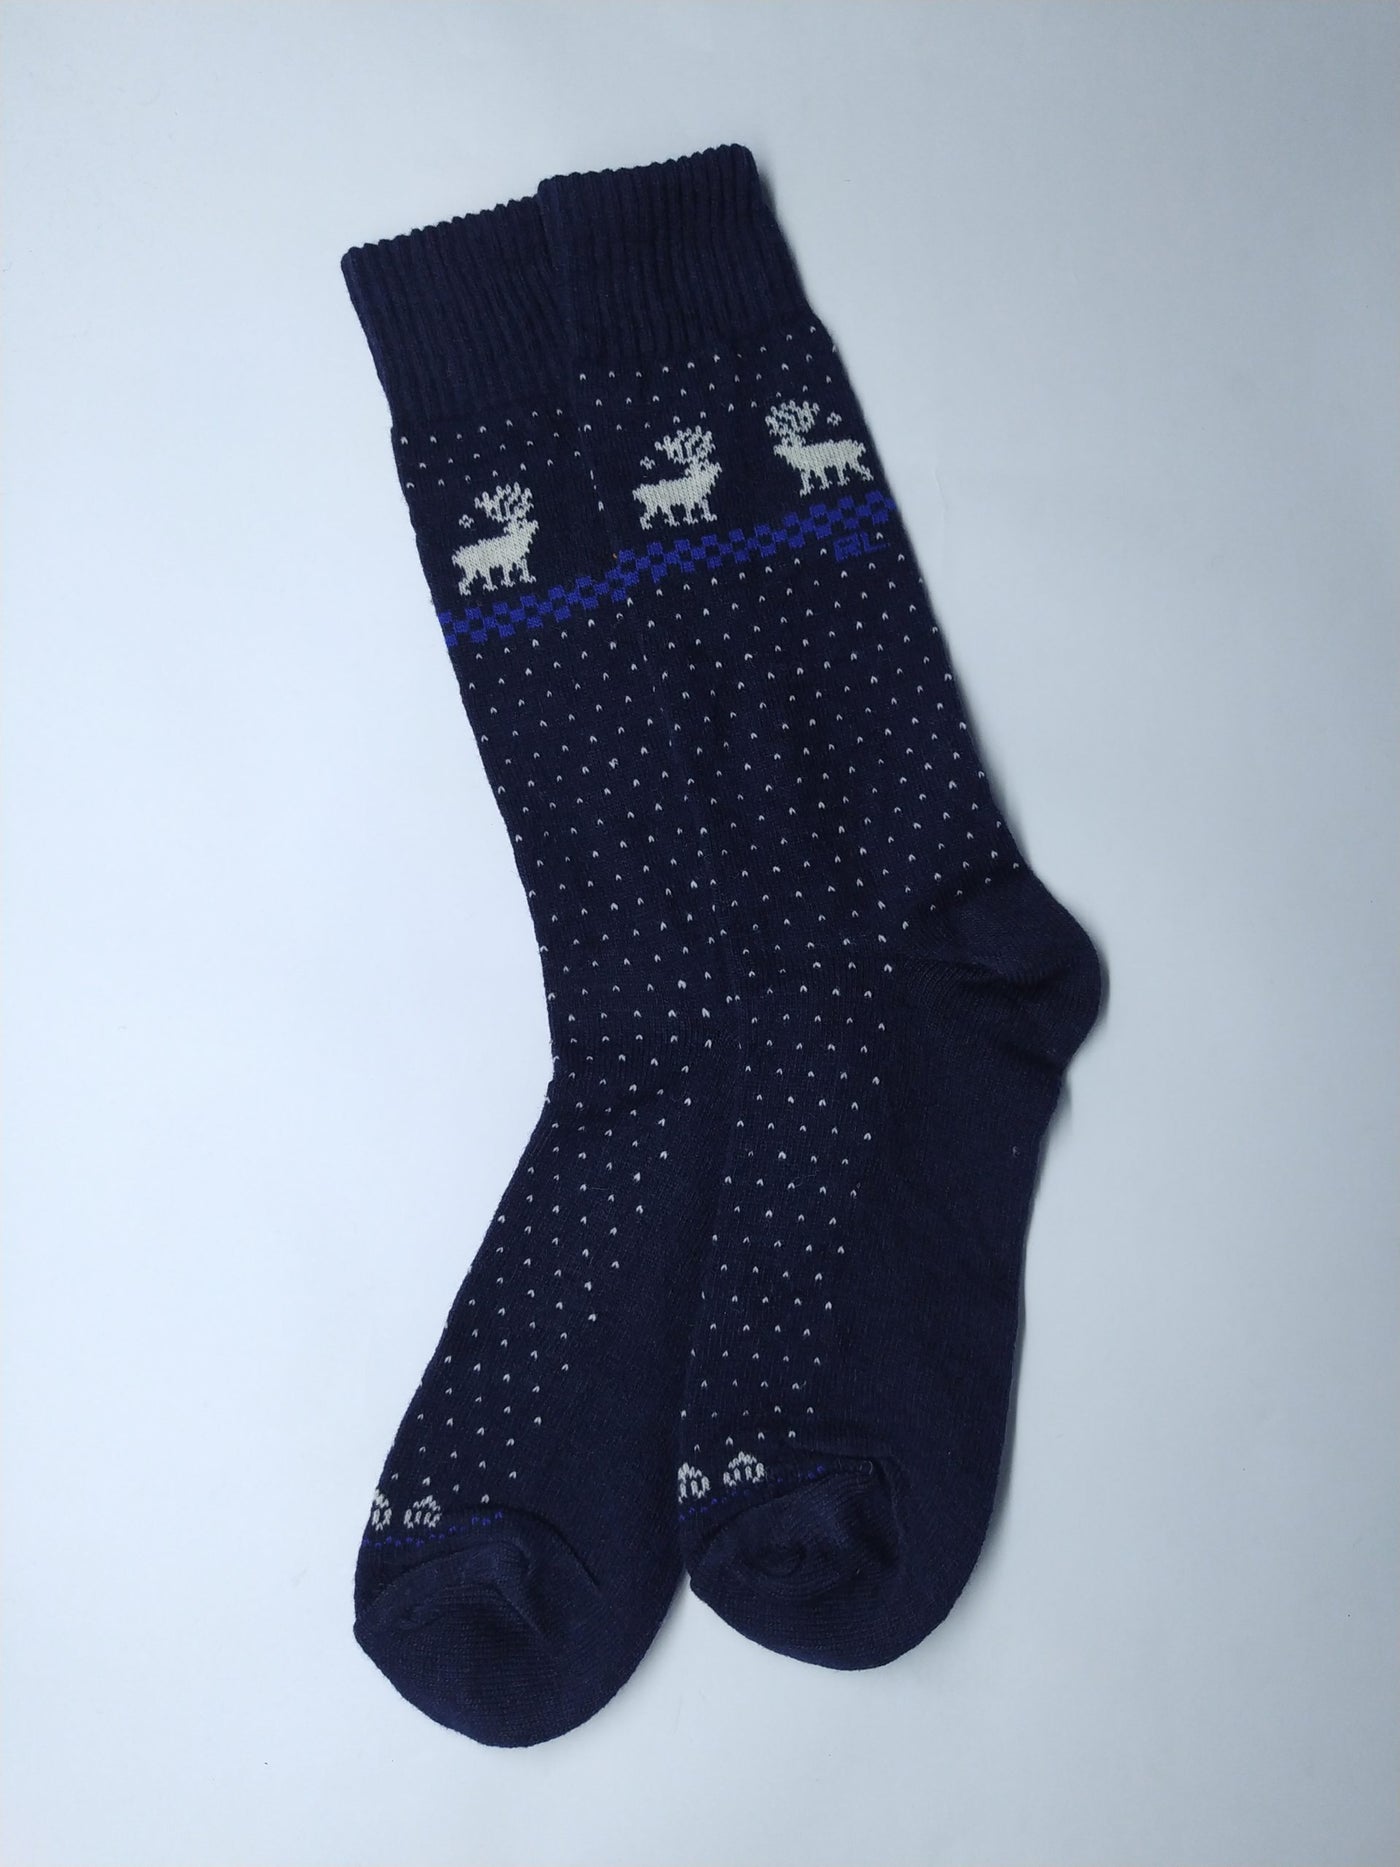 Forest Deers Socks - SOXO #1 Imported Socks Brand in Pakistan